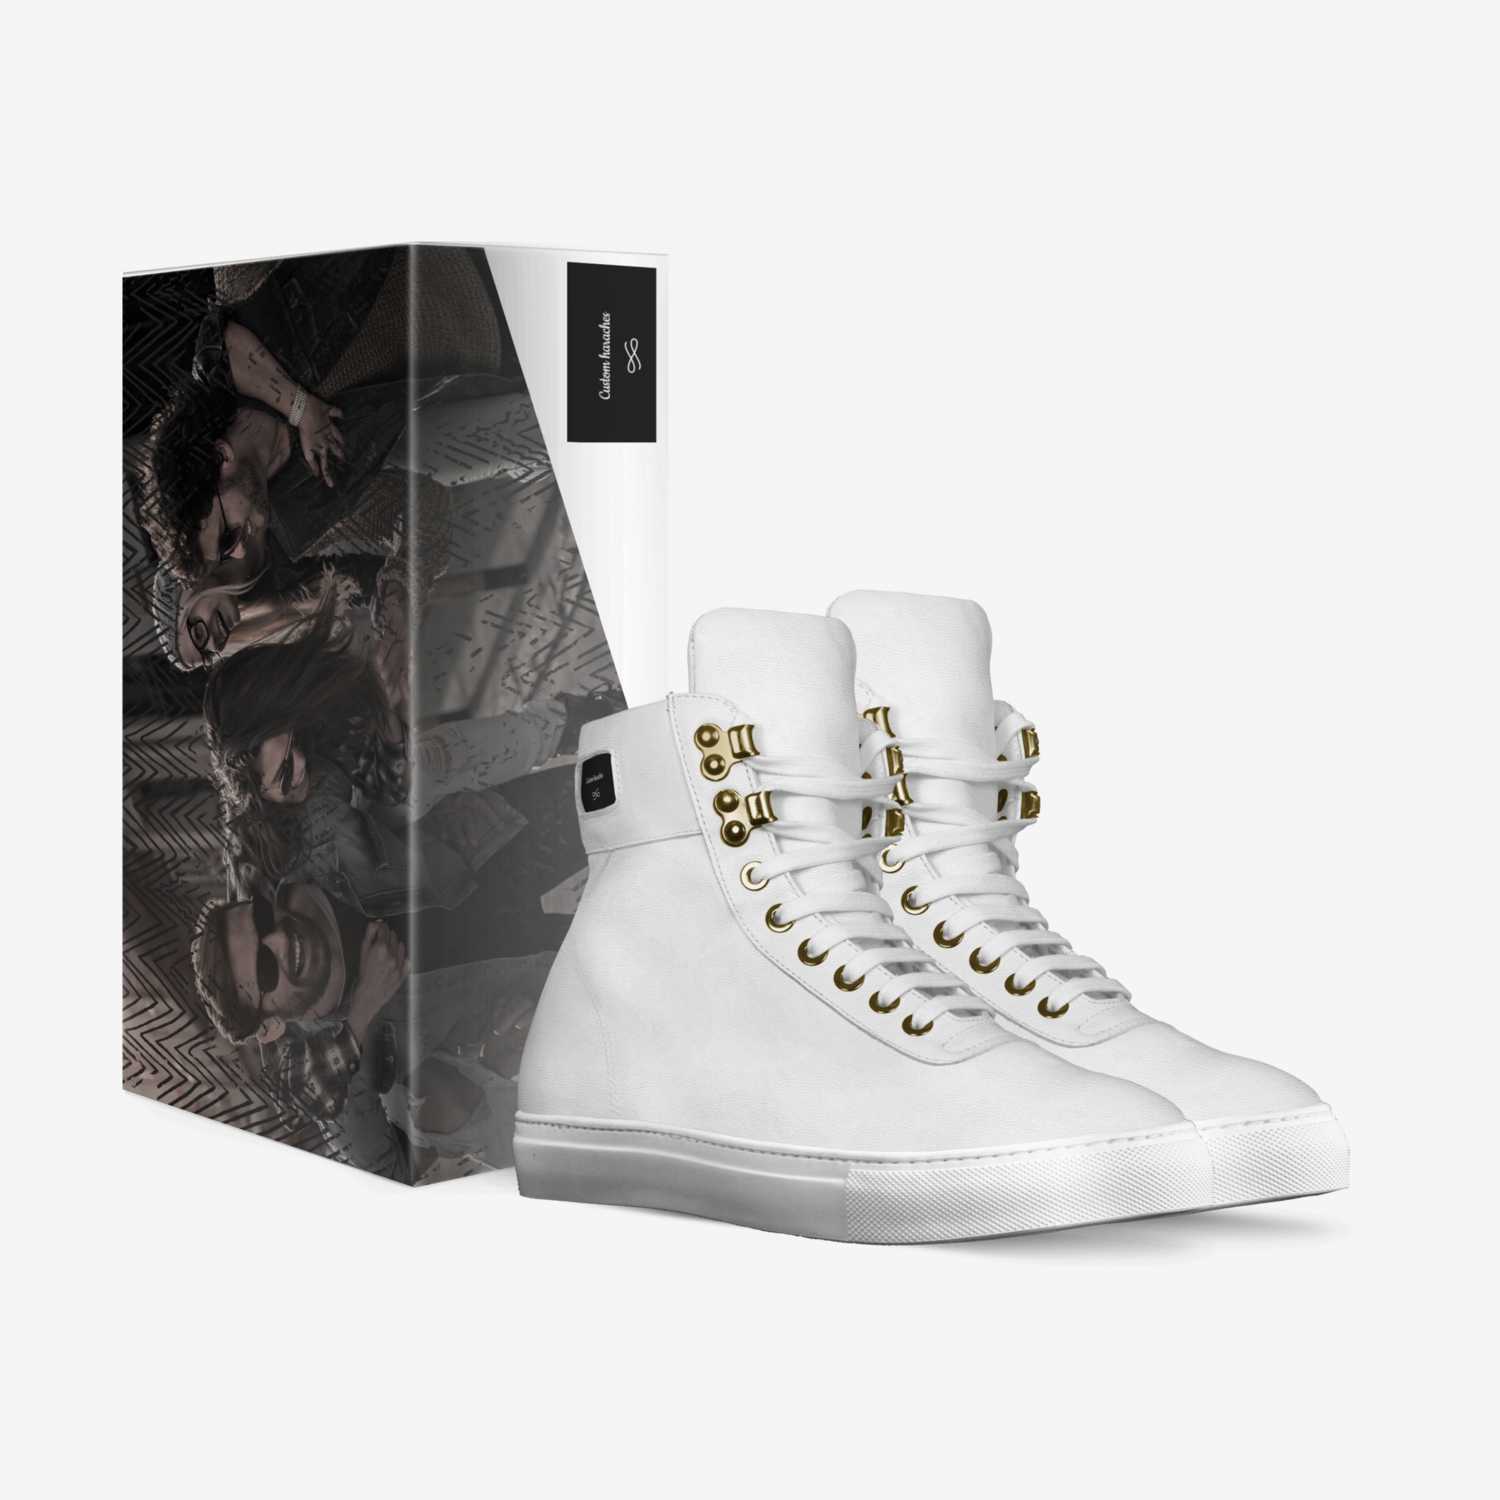 Custom haraches  custom made in Italy shoes by Mahalo Corson | Box view